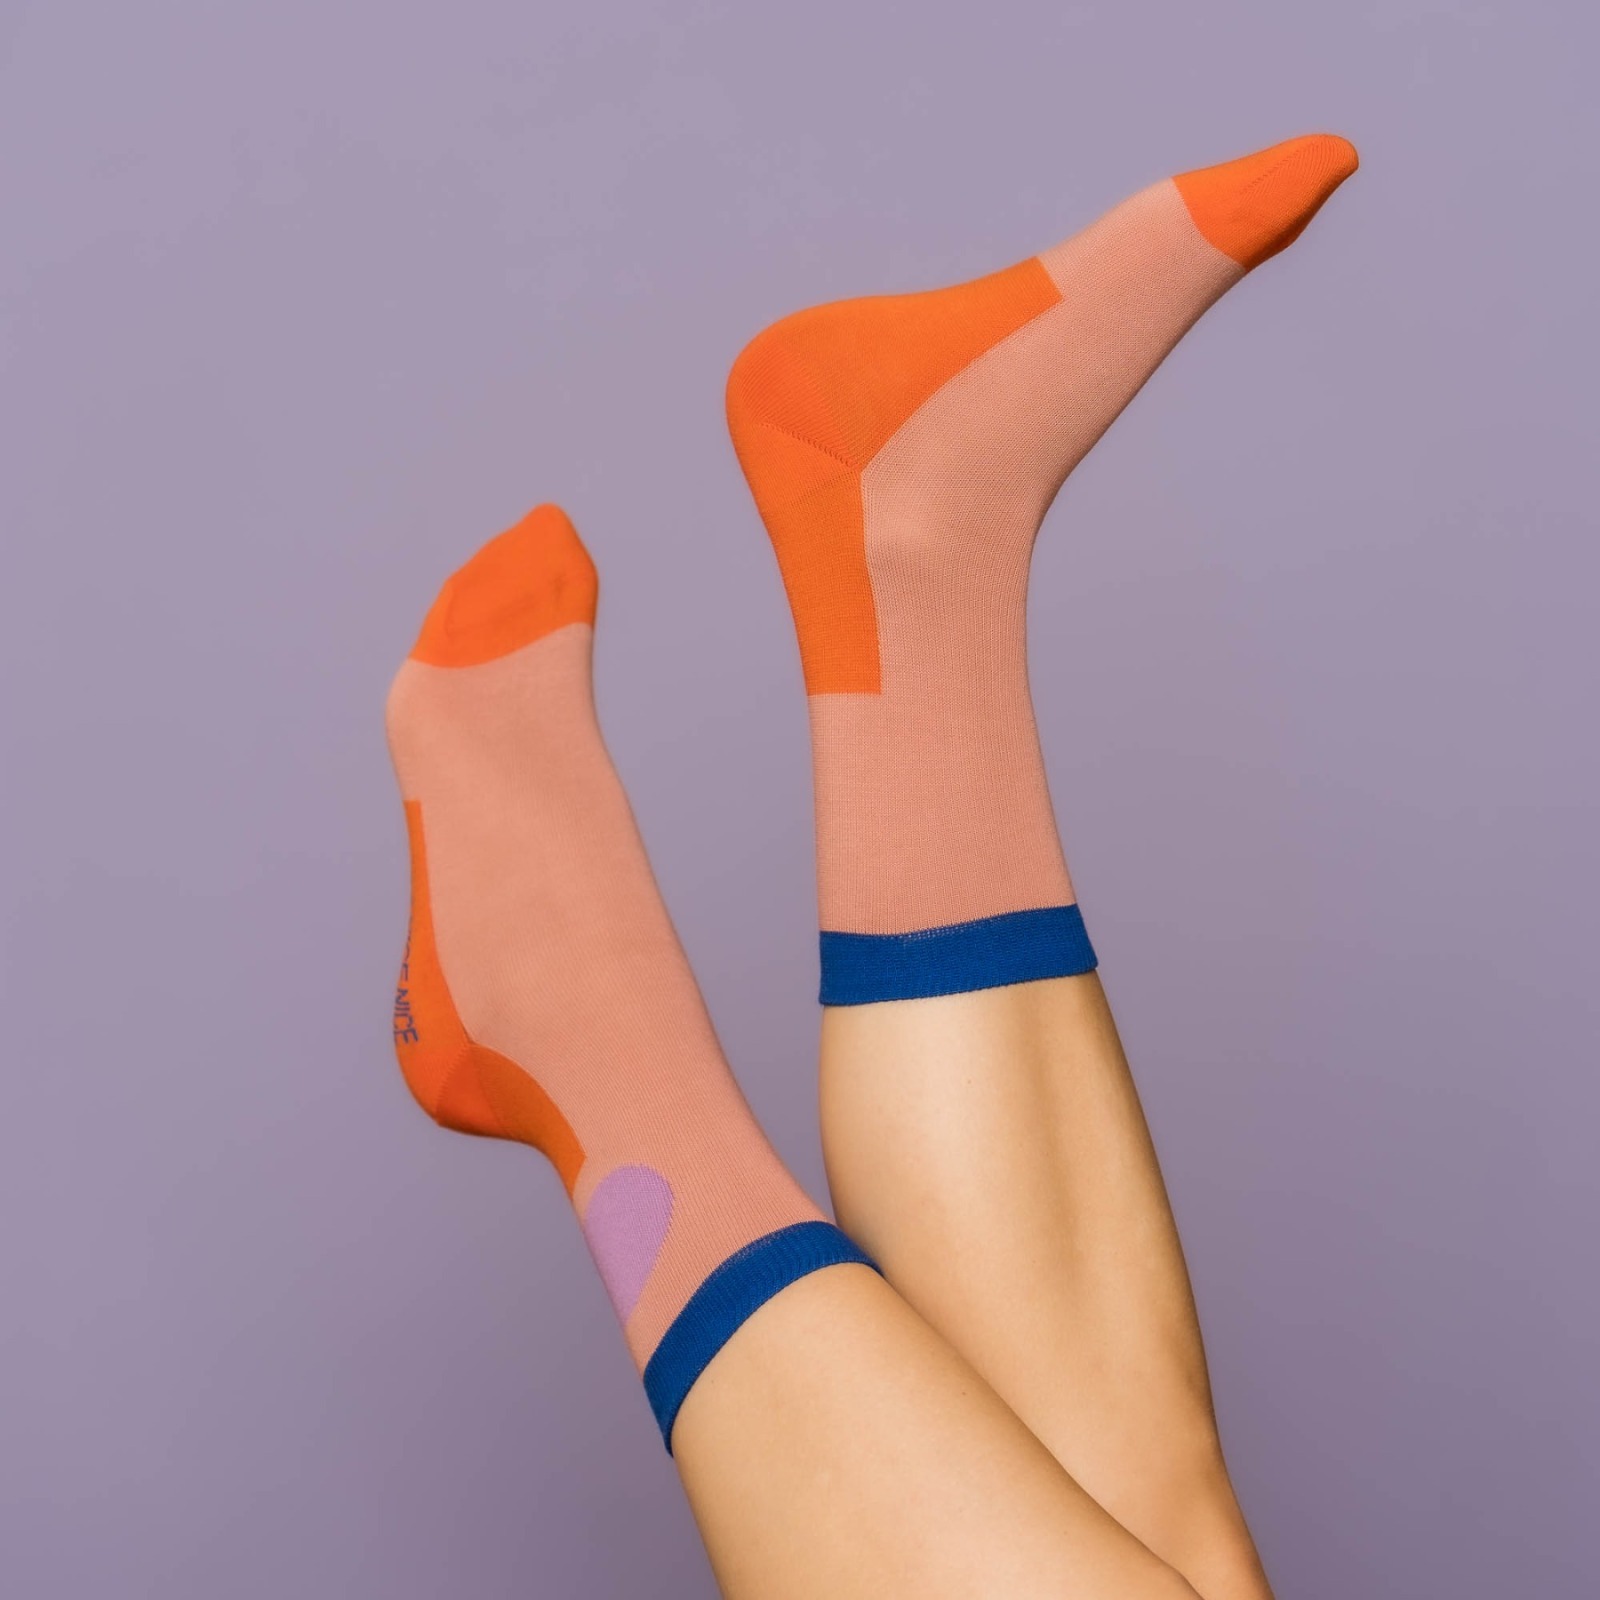 nicenicenice - nice socks minimal orange lilac